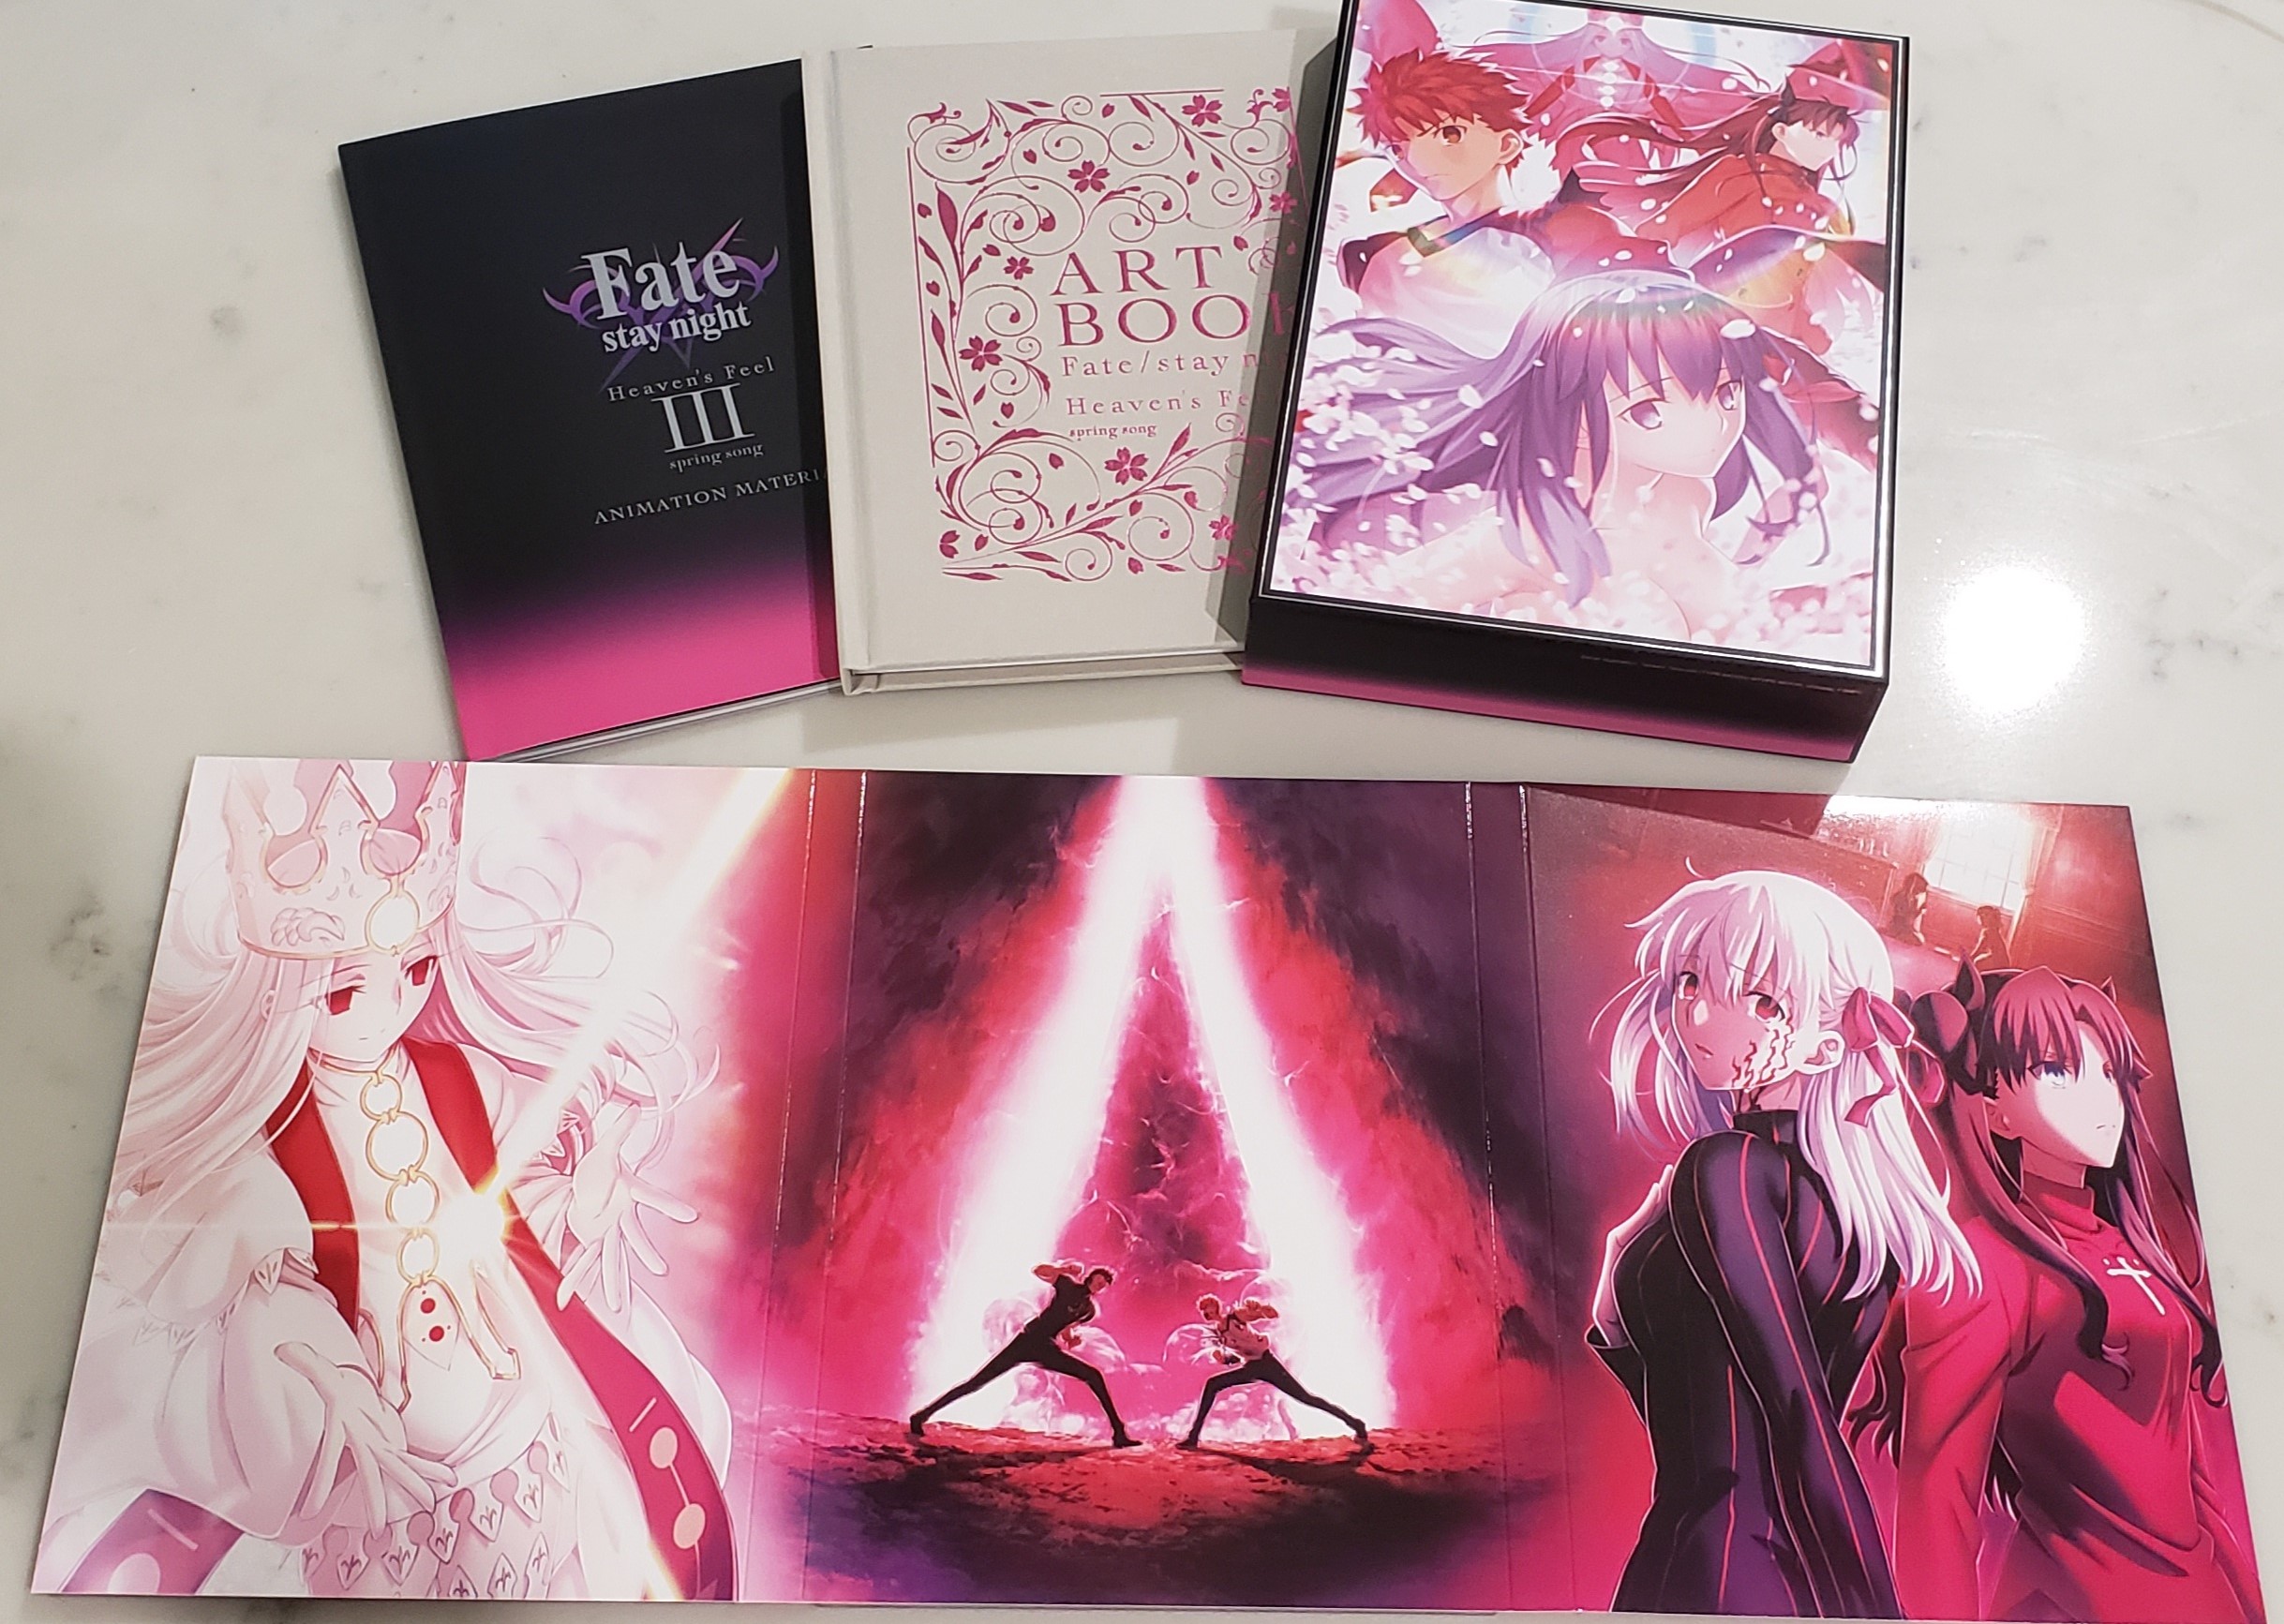 Fate/Stay Night Heaven's Feel III. spring song Blu-ray  